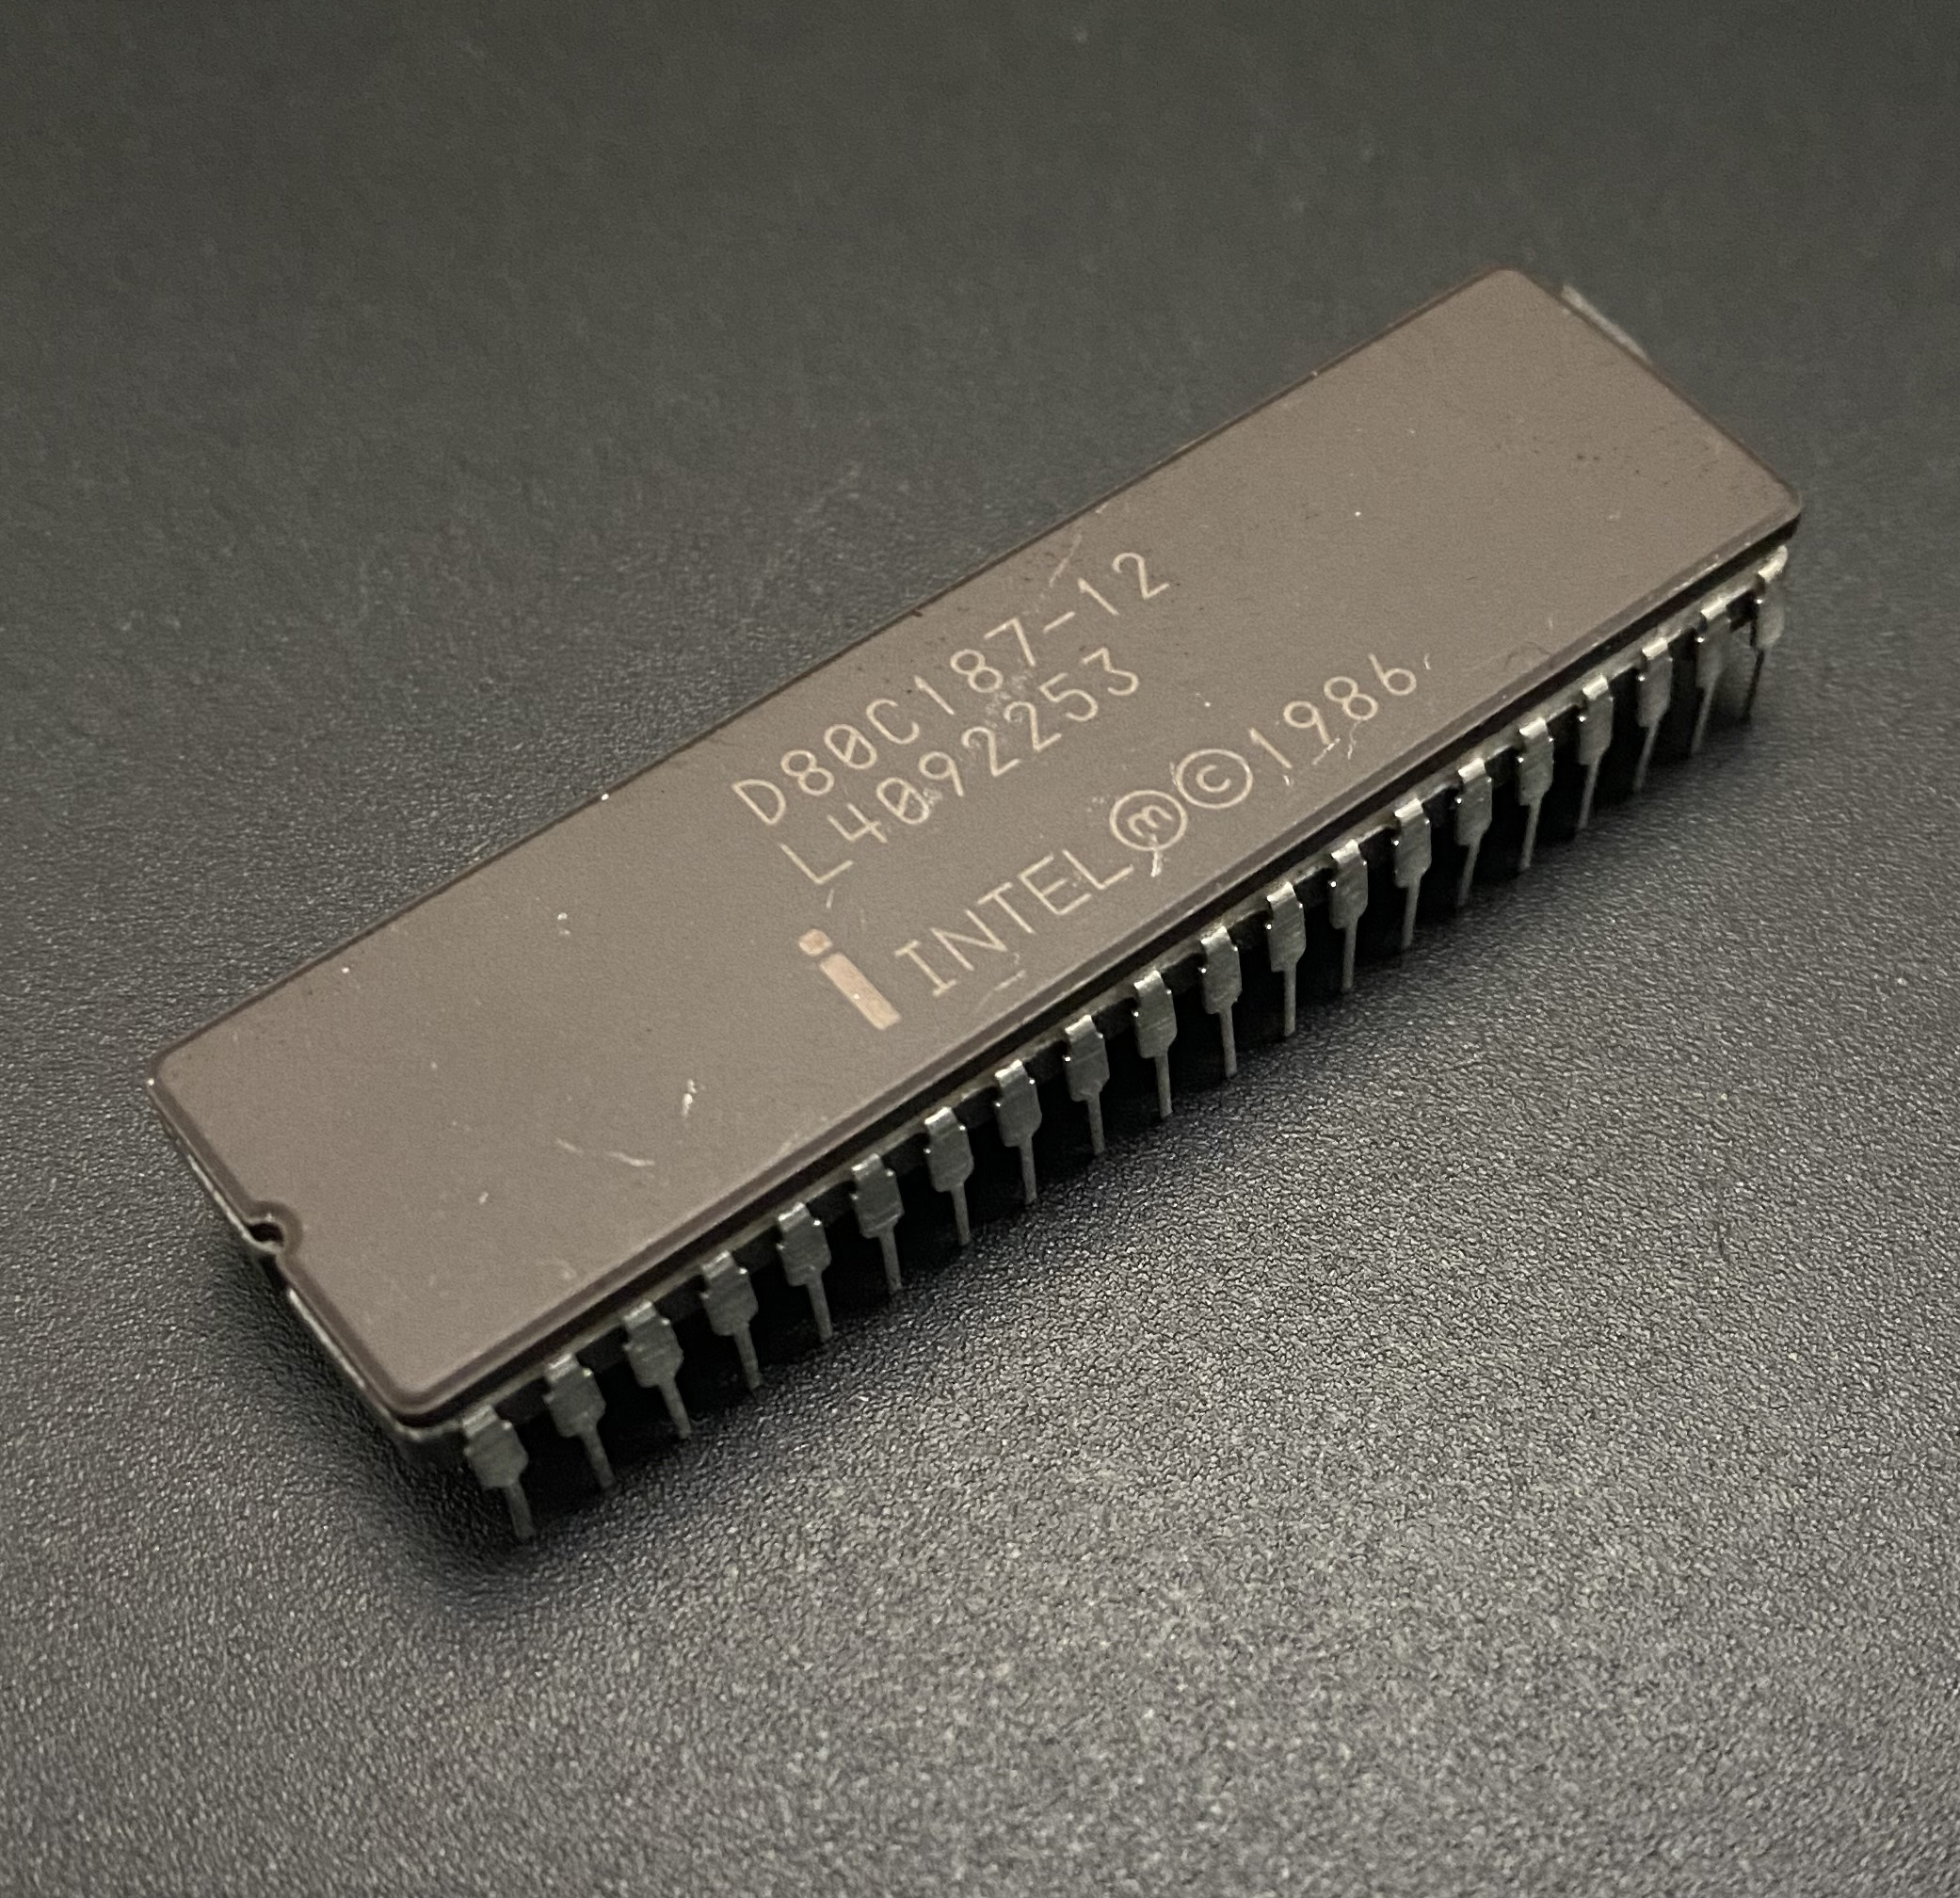 Intel d80287-10 coprocessore FPU NPU copro for AMD INTEL Harris IBM 286 Retrò 